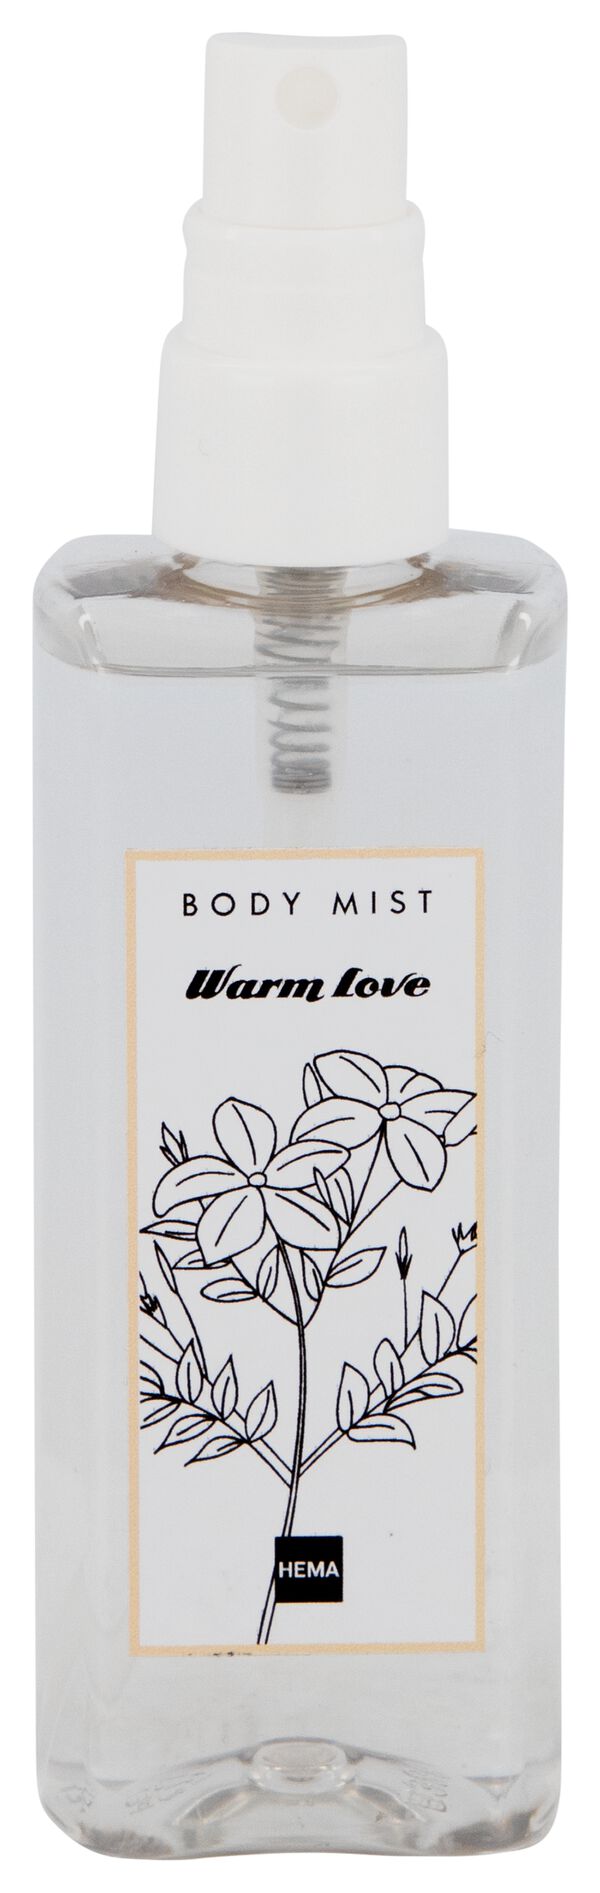 body mist warm love natural 100ml - 11280012 - HEMA